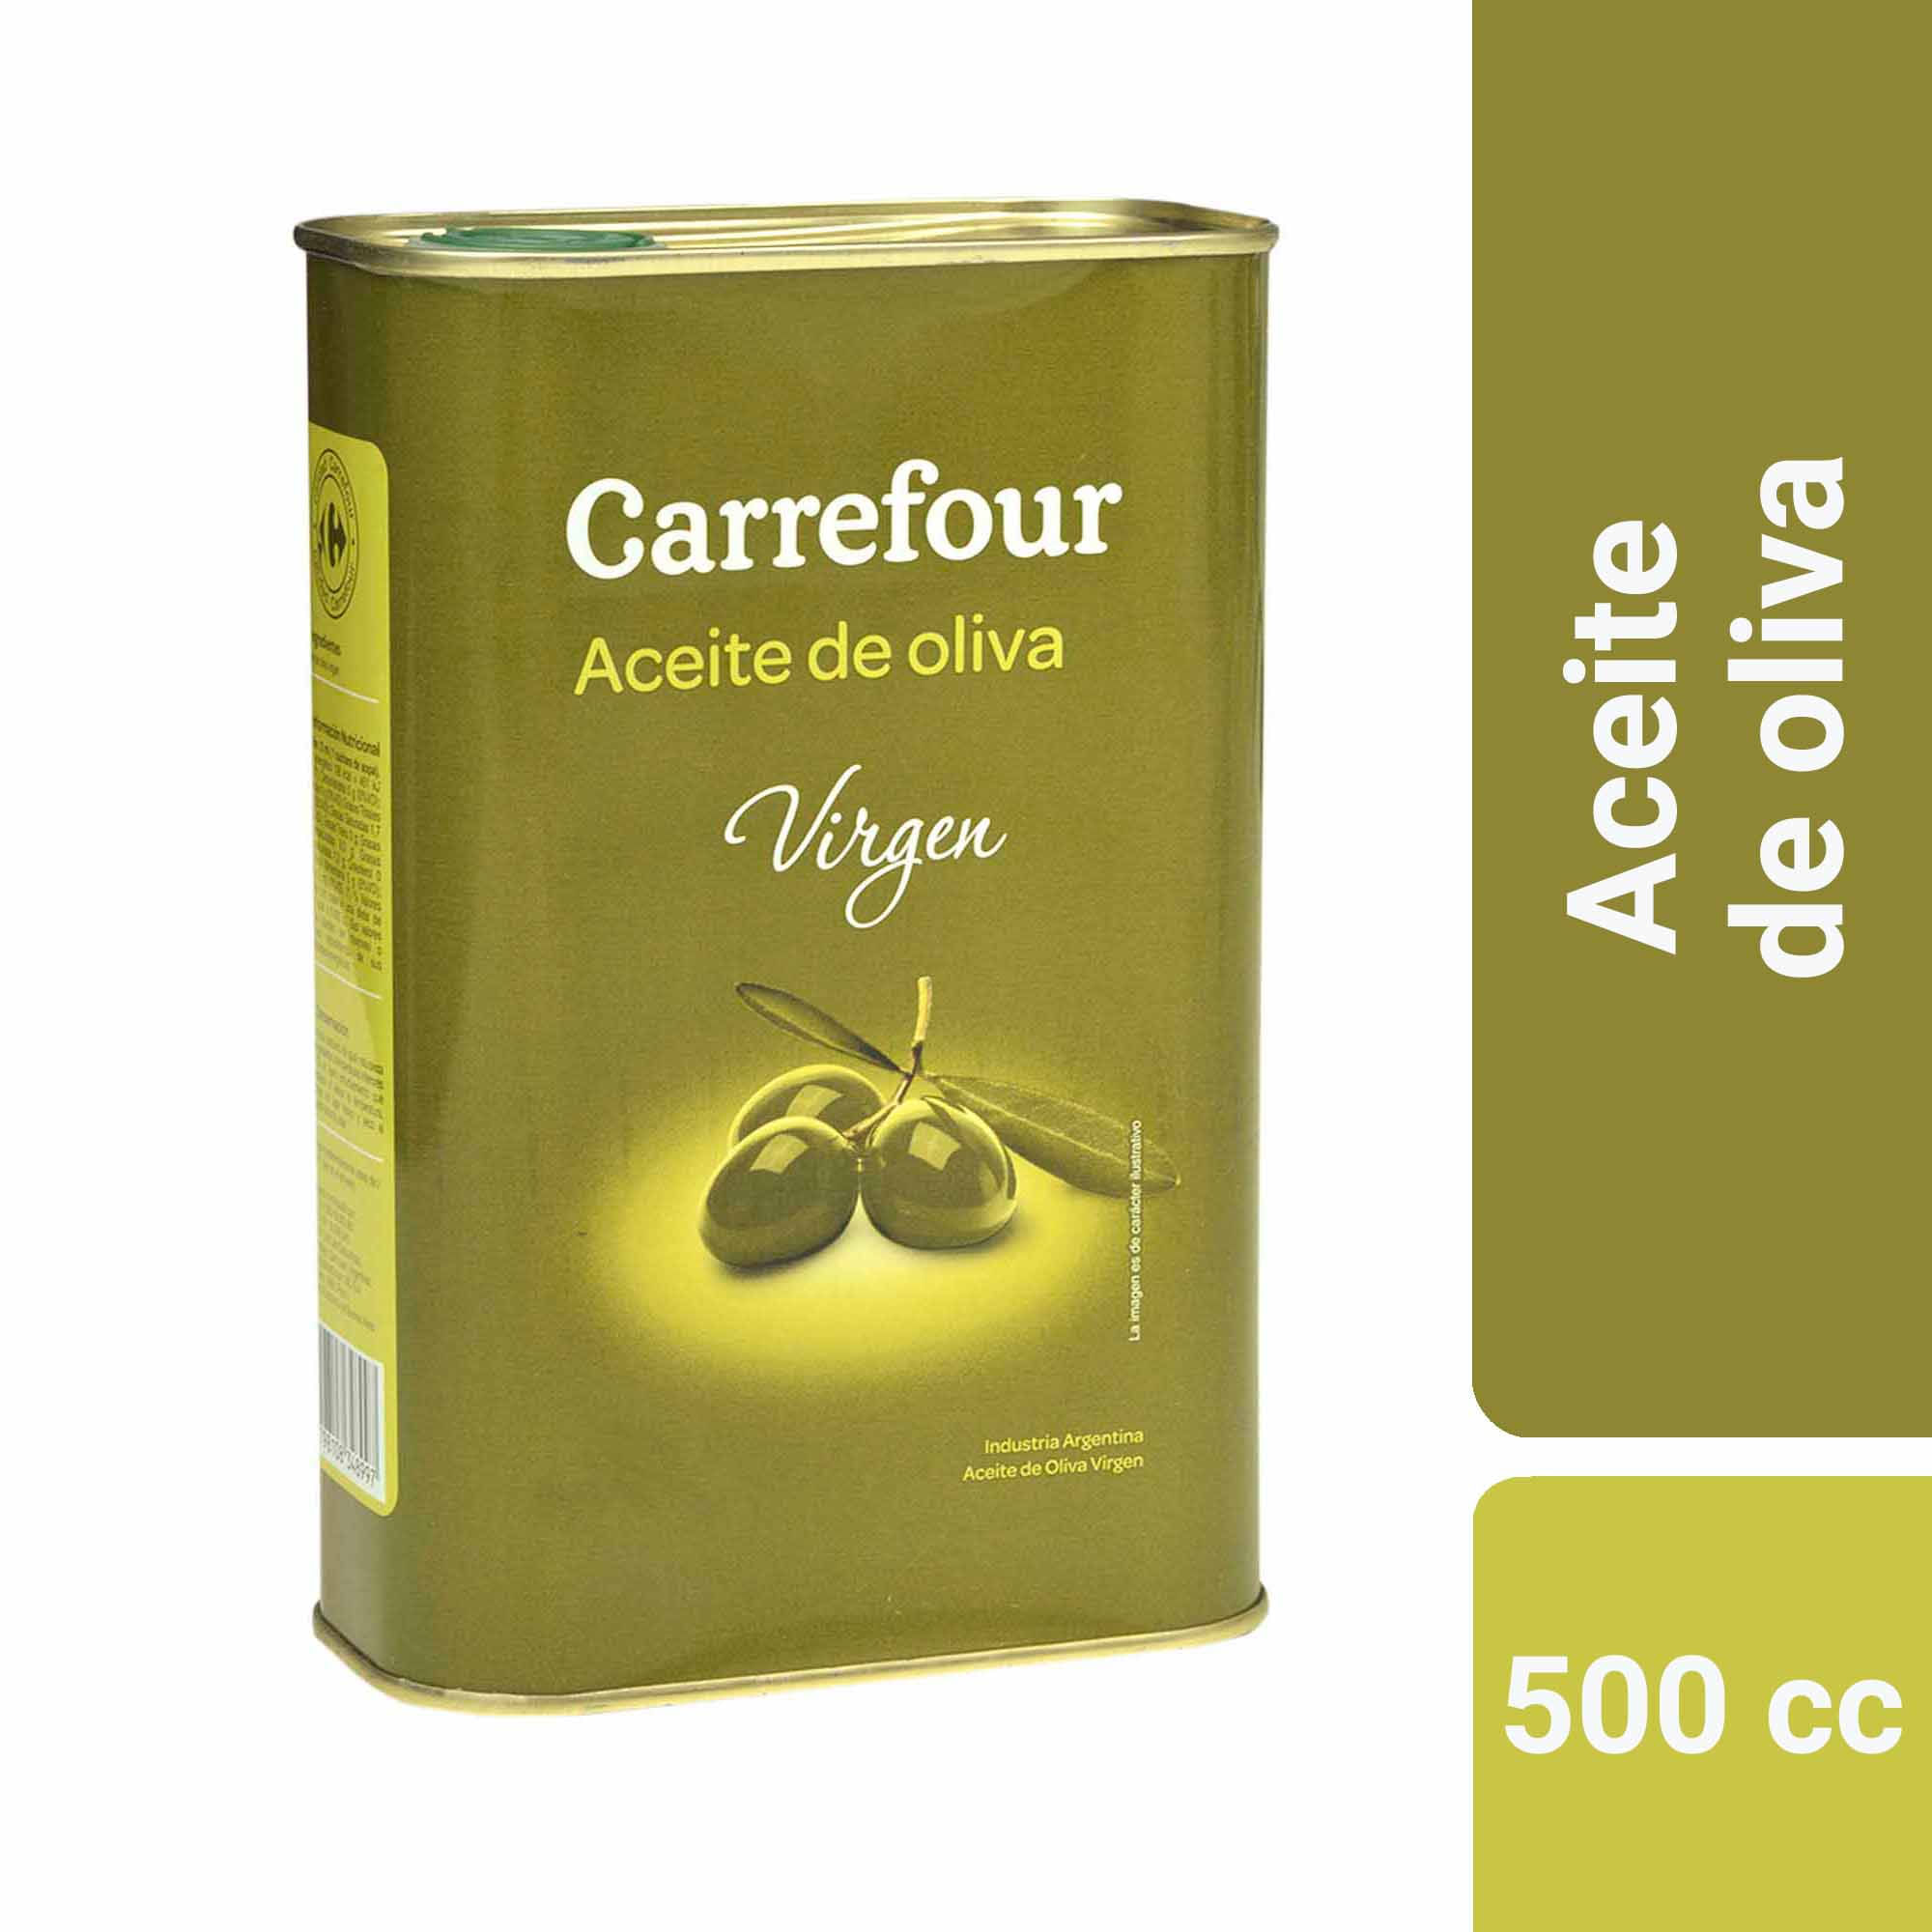 Aceite oliva Carrefour lata 500 cc. - Carrefour